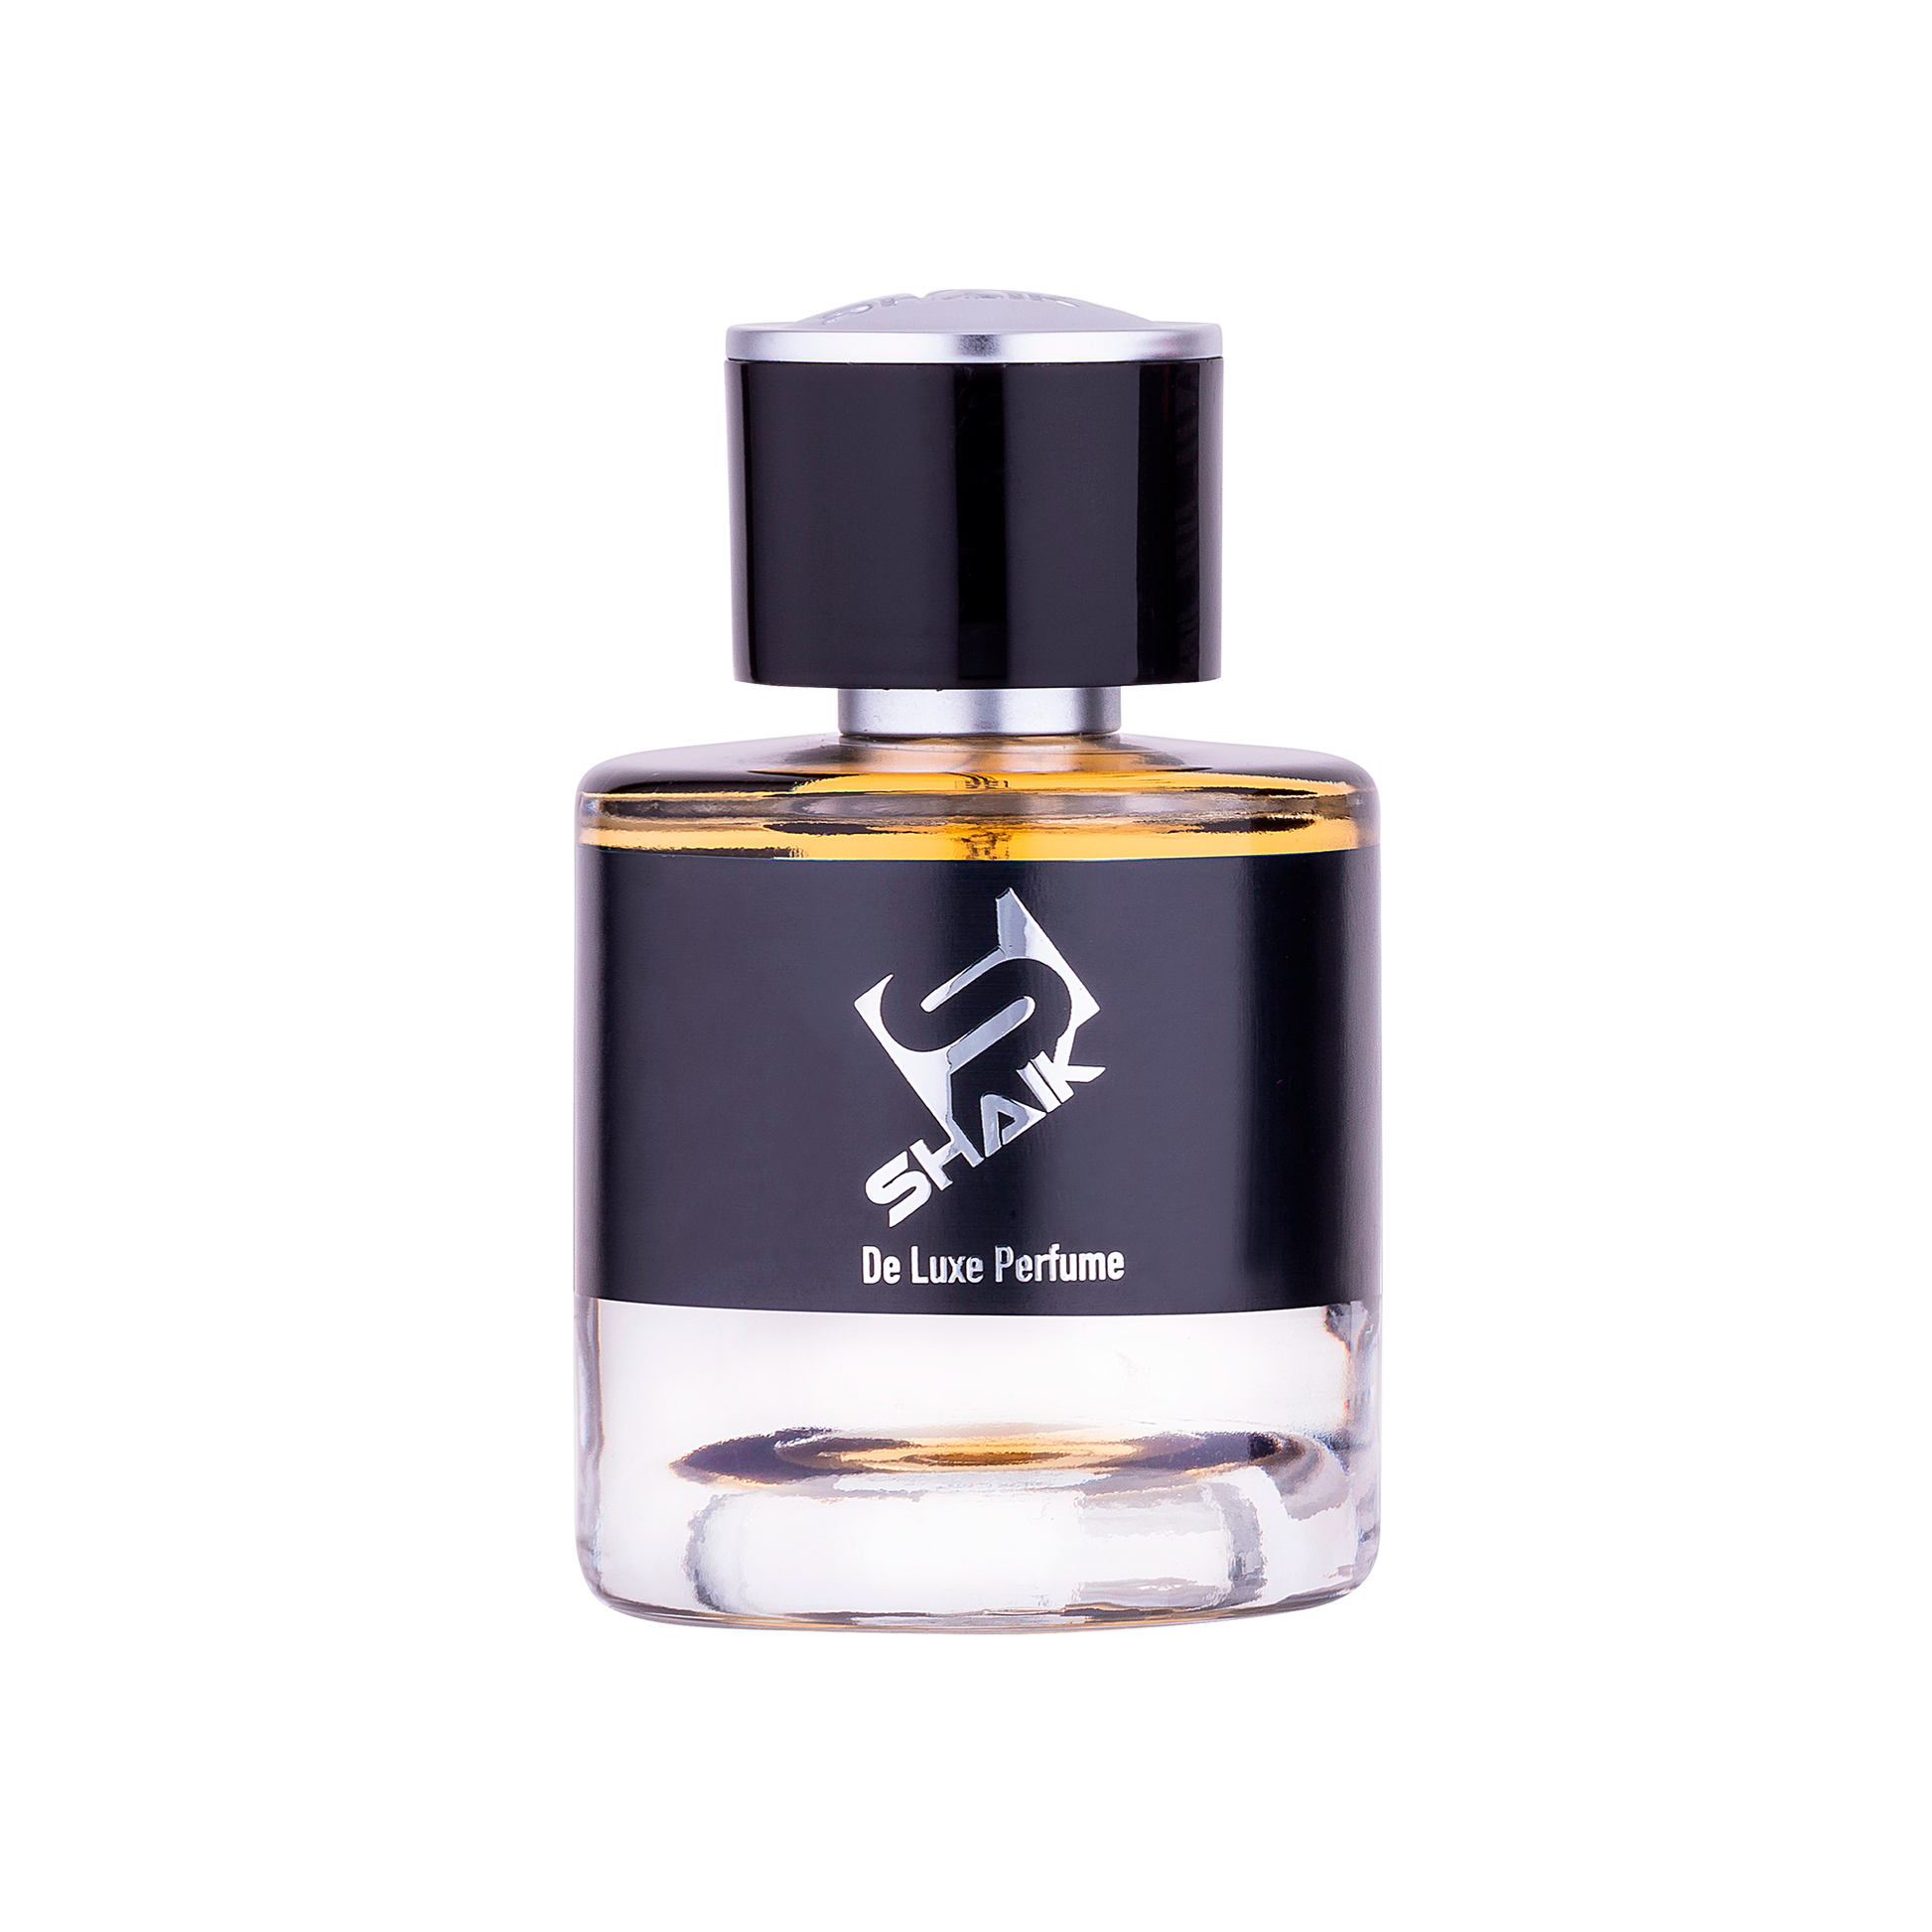 Shaik - 01 - Rhubarb, Patchouly, Sandalwood - Shaik Perfume